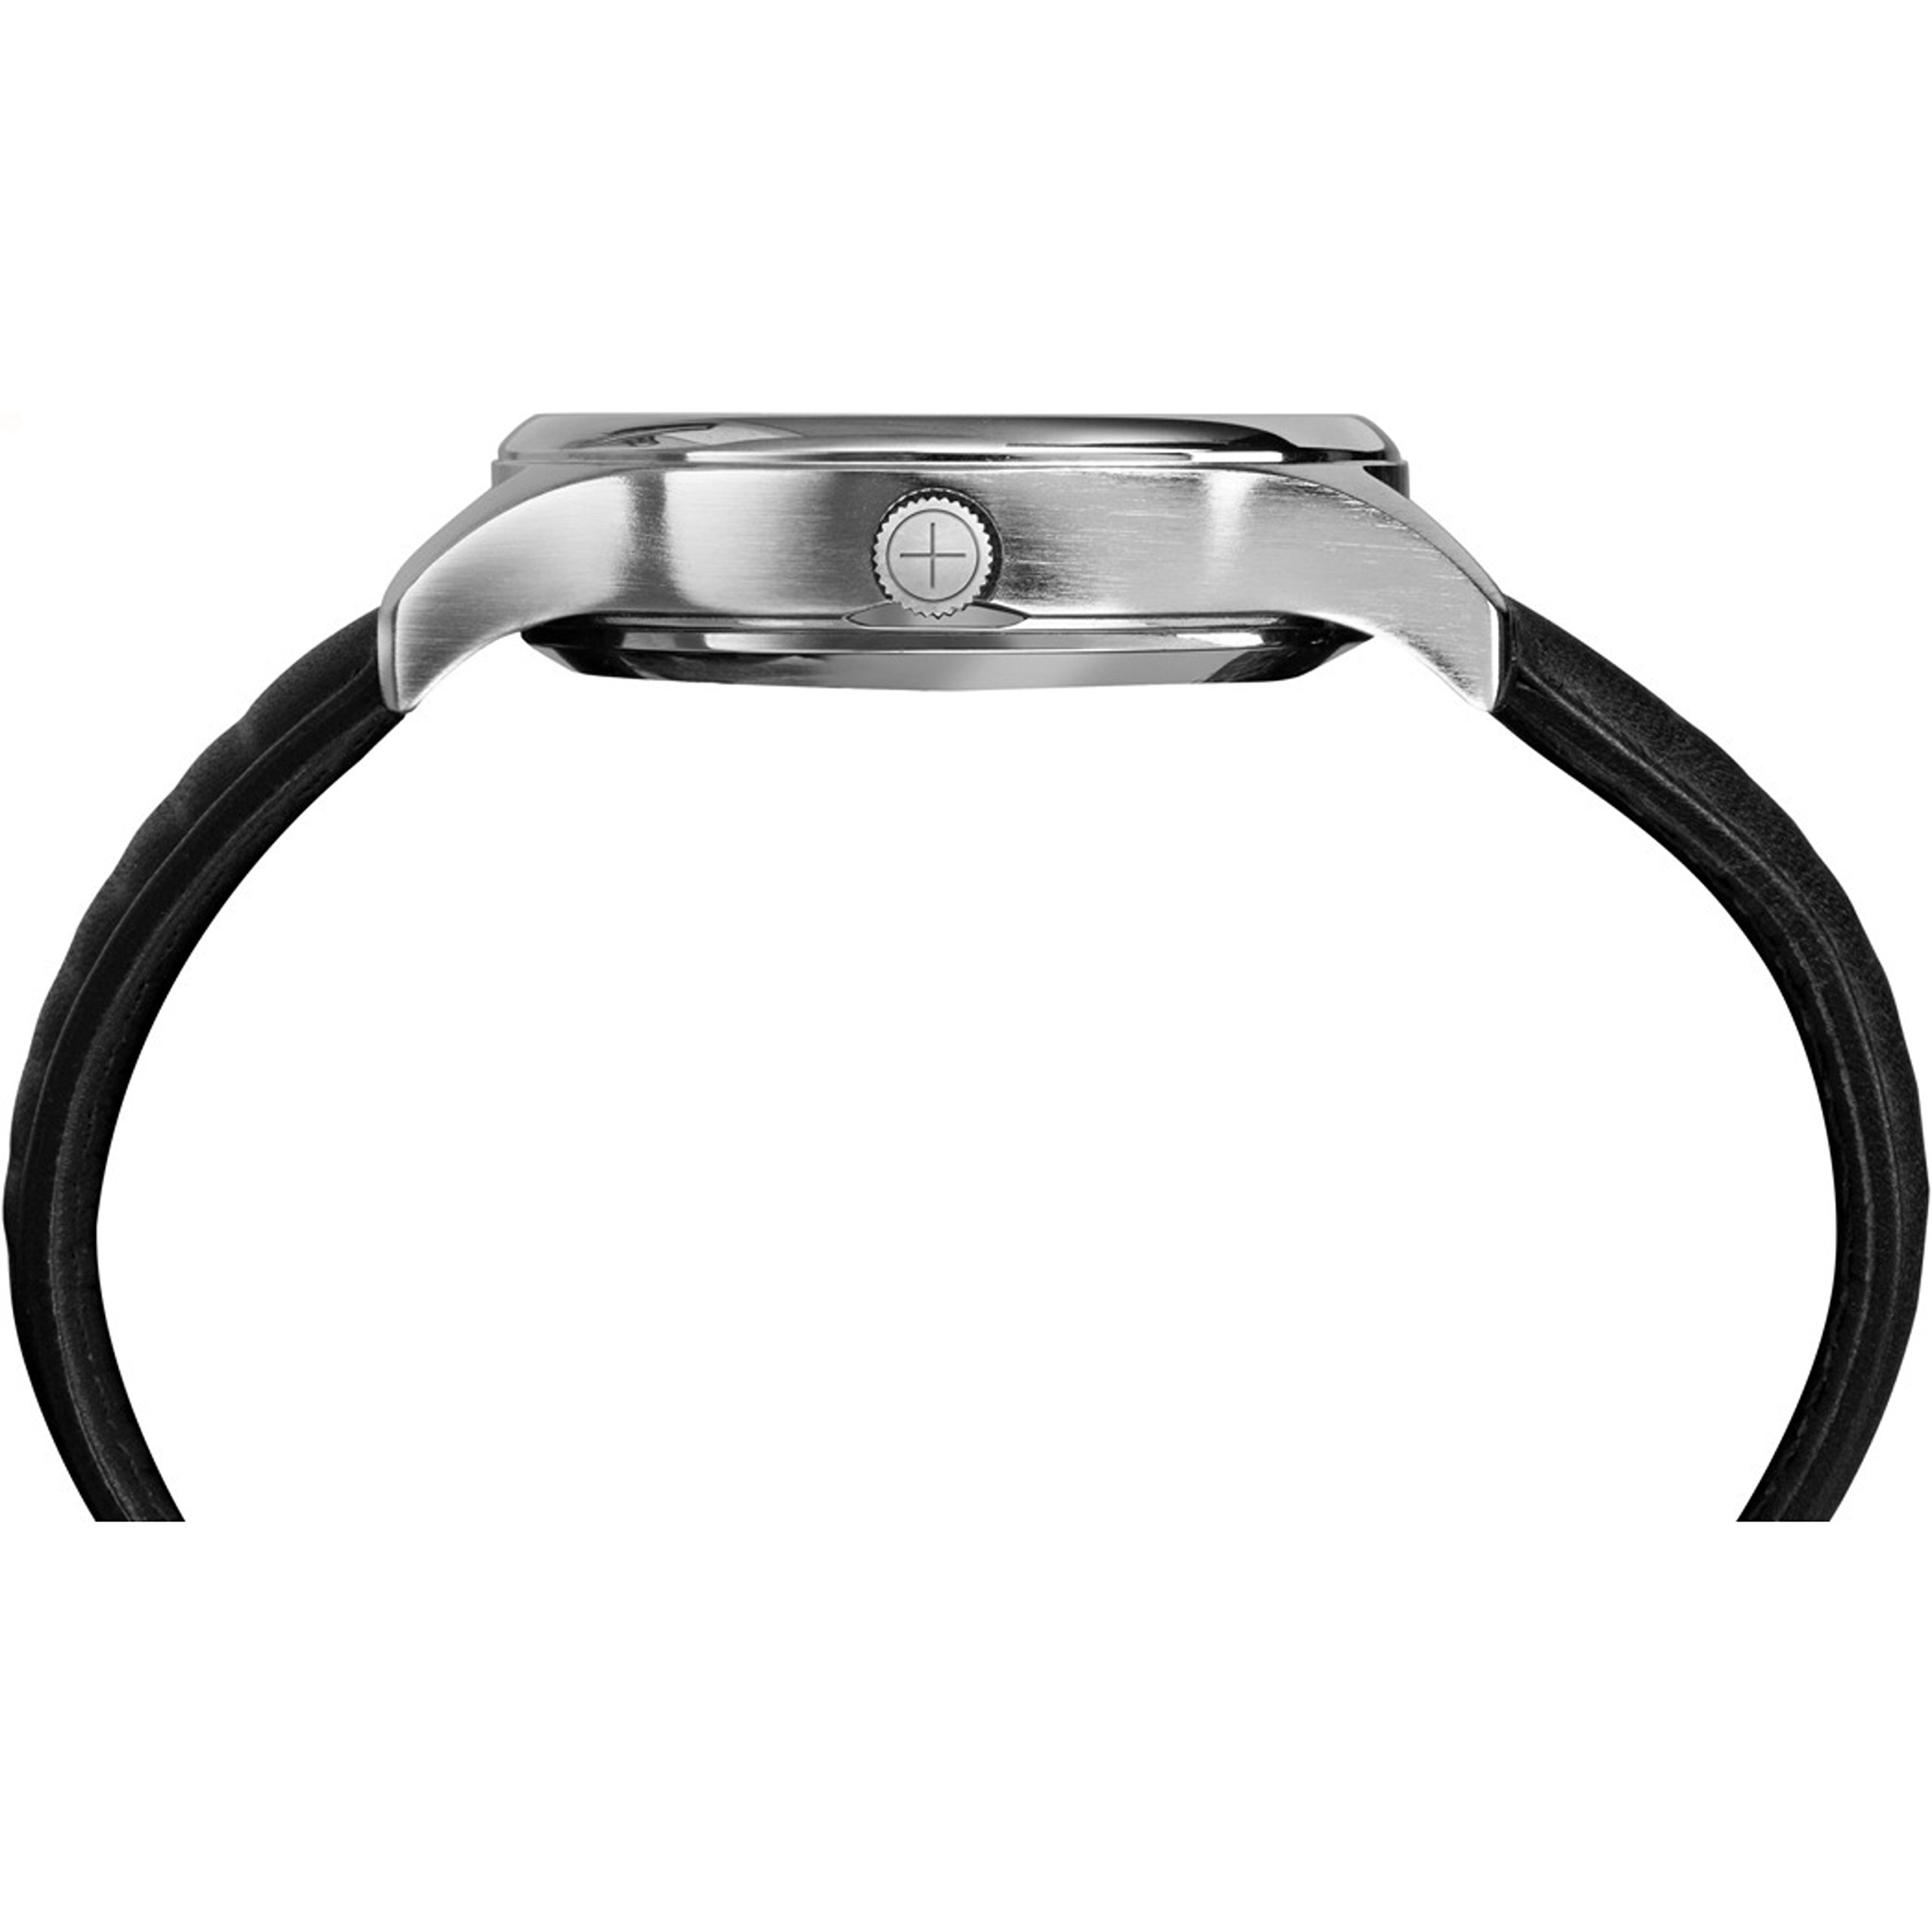 Timex Men's TW2P93200 IQ+ Move Activity Tracker Black Leather Strap Smartwatch